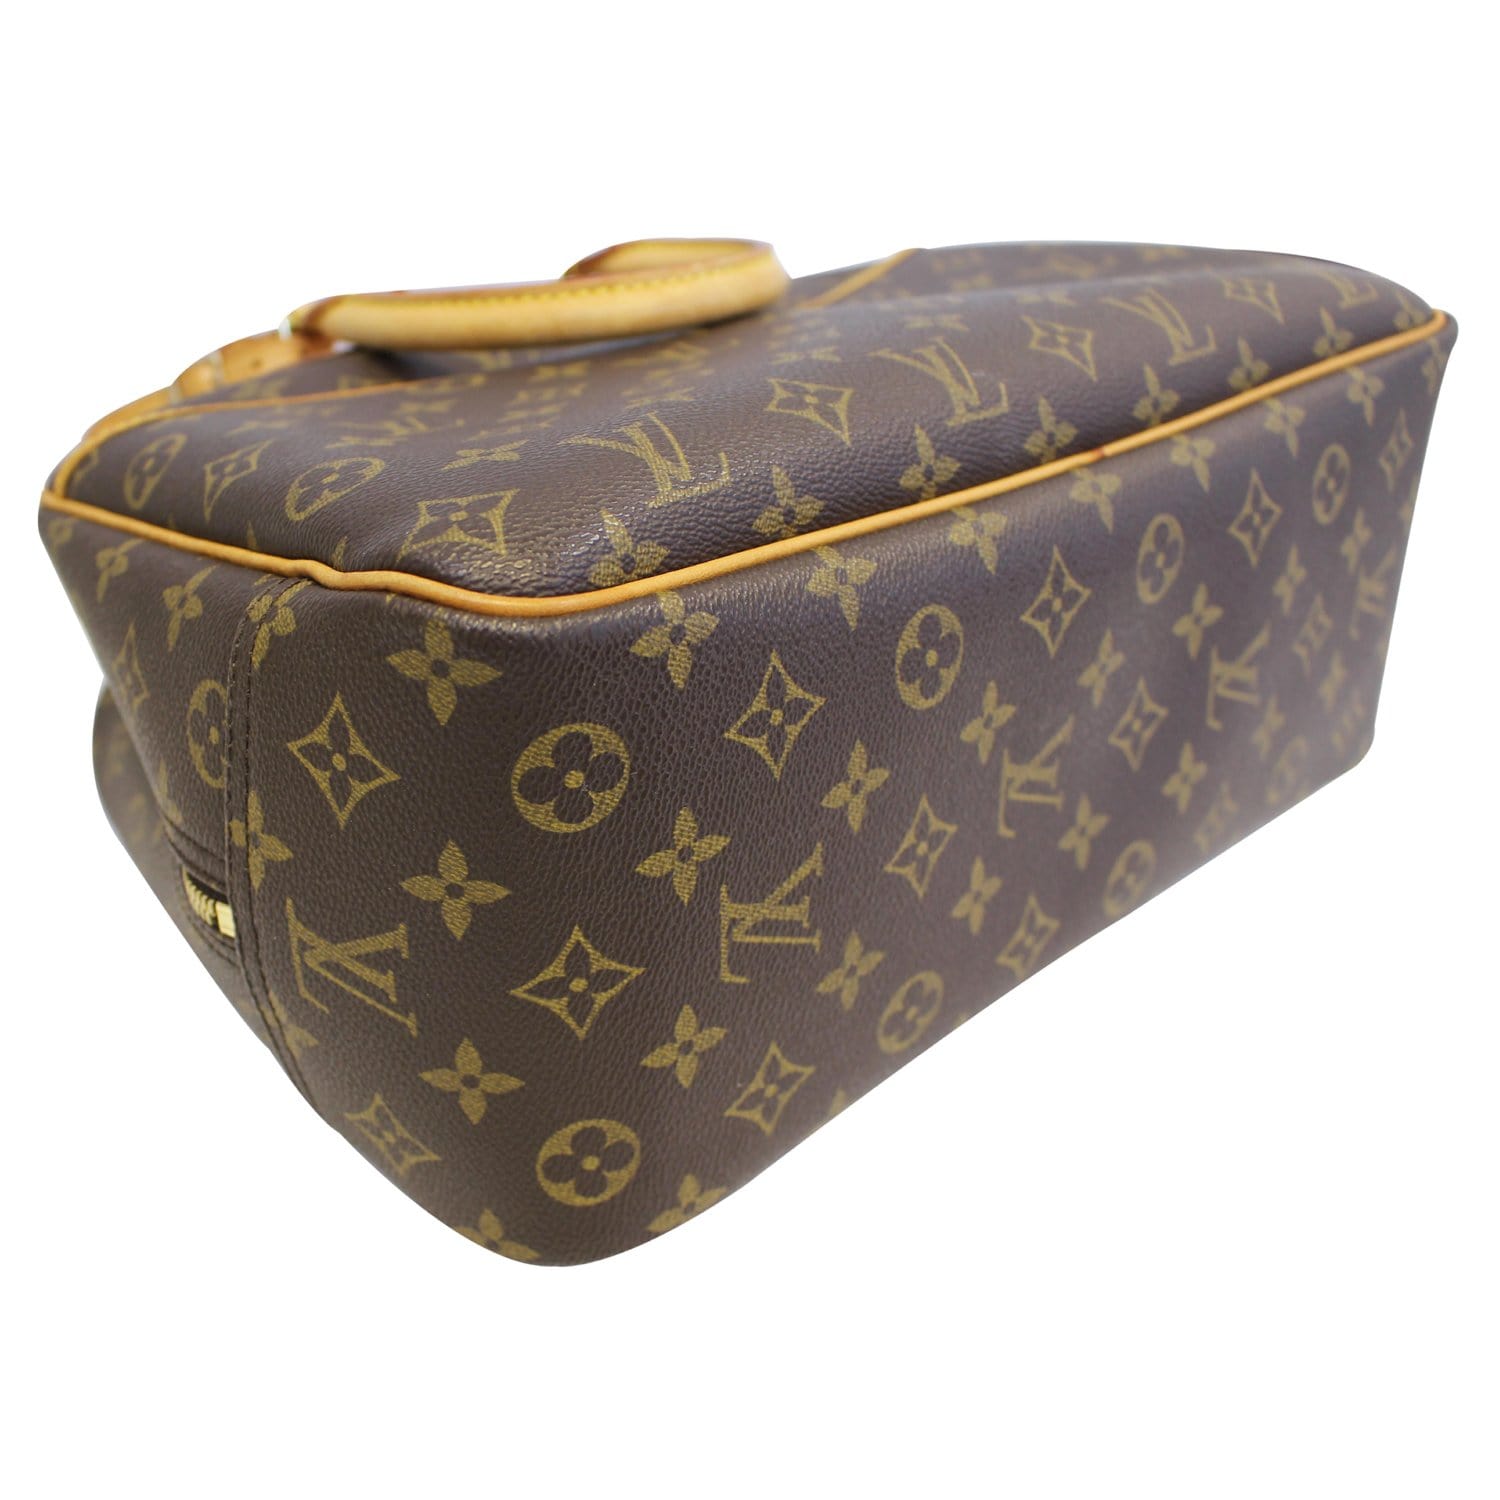 Louis Vuitton Monogram Bel Air Bag - Brown Satchels, Handbags - LOU31176